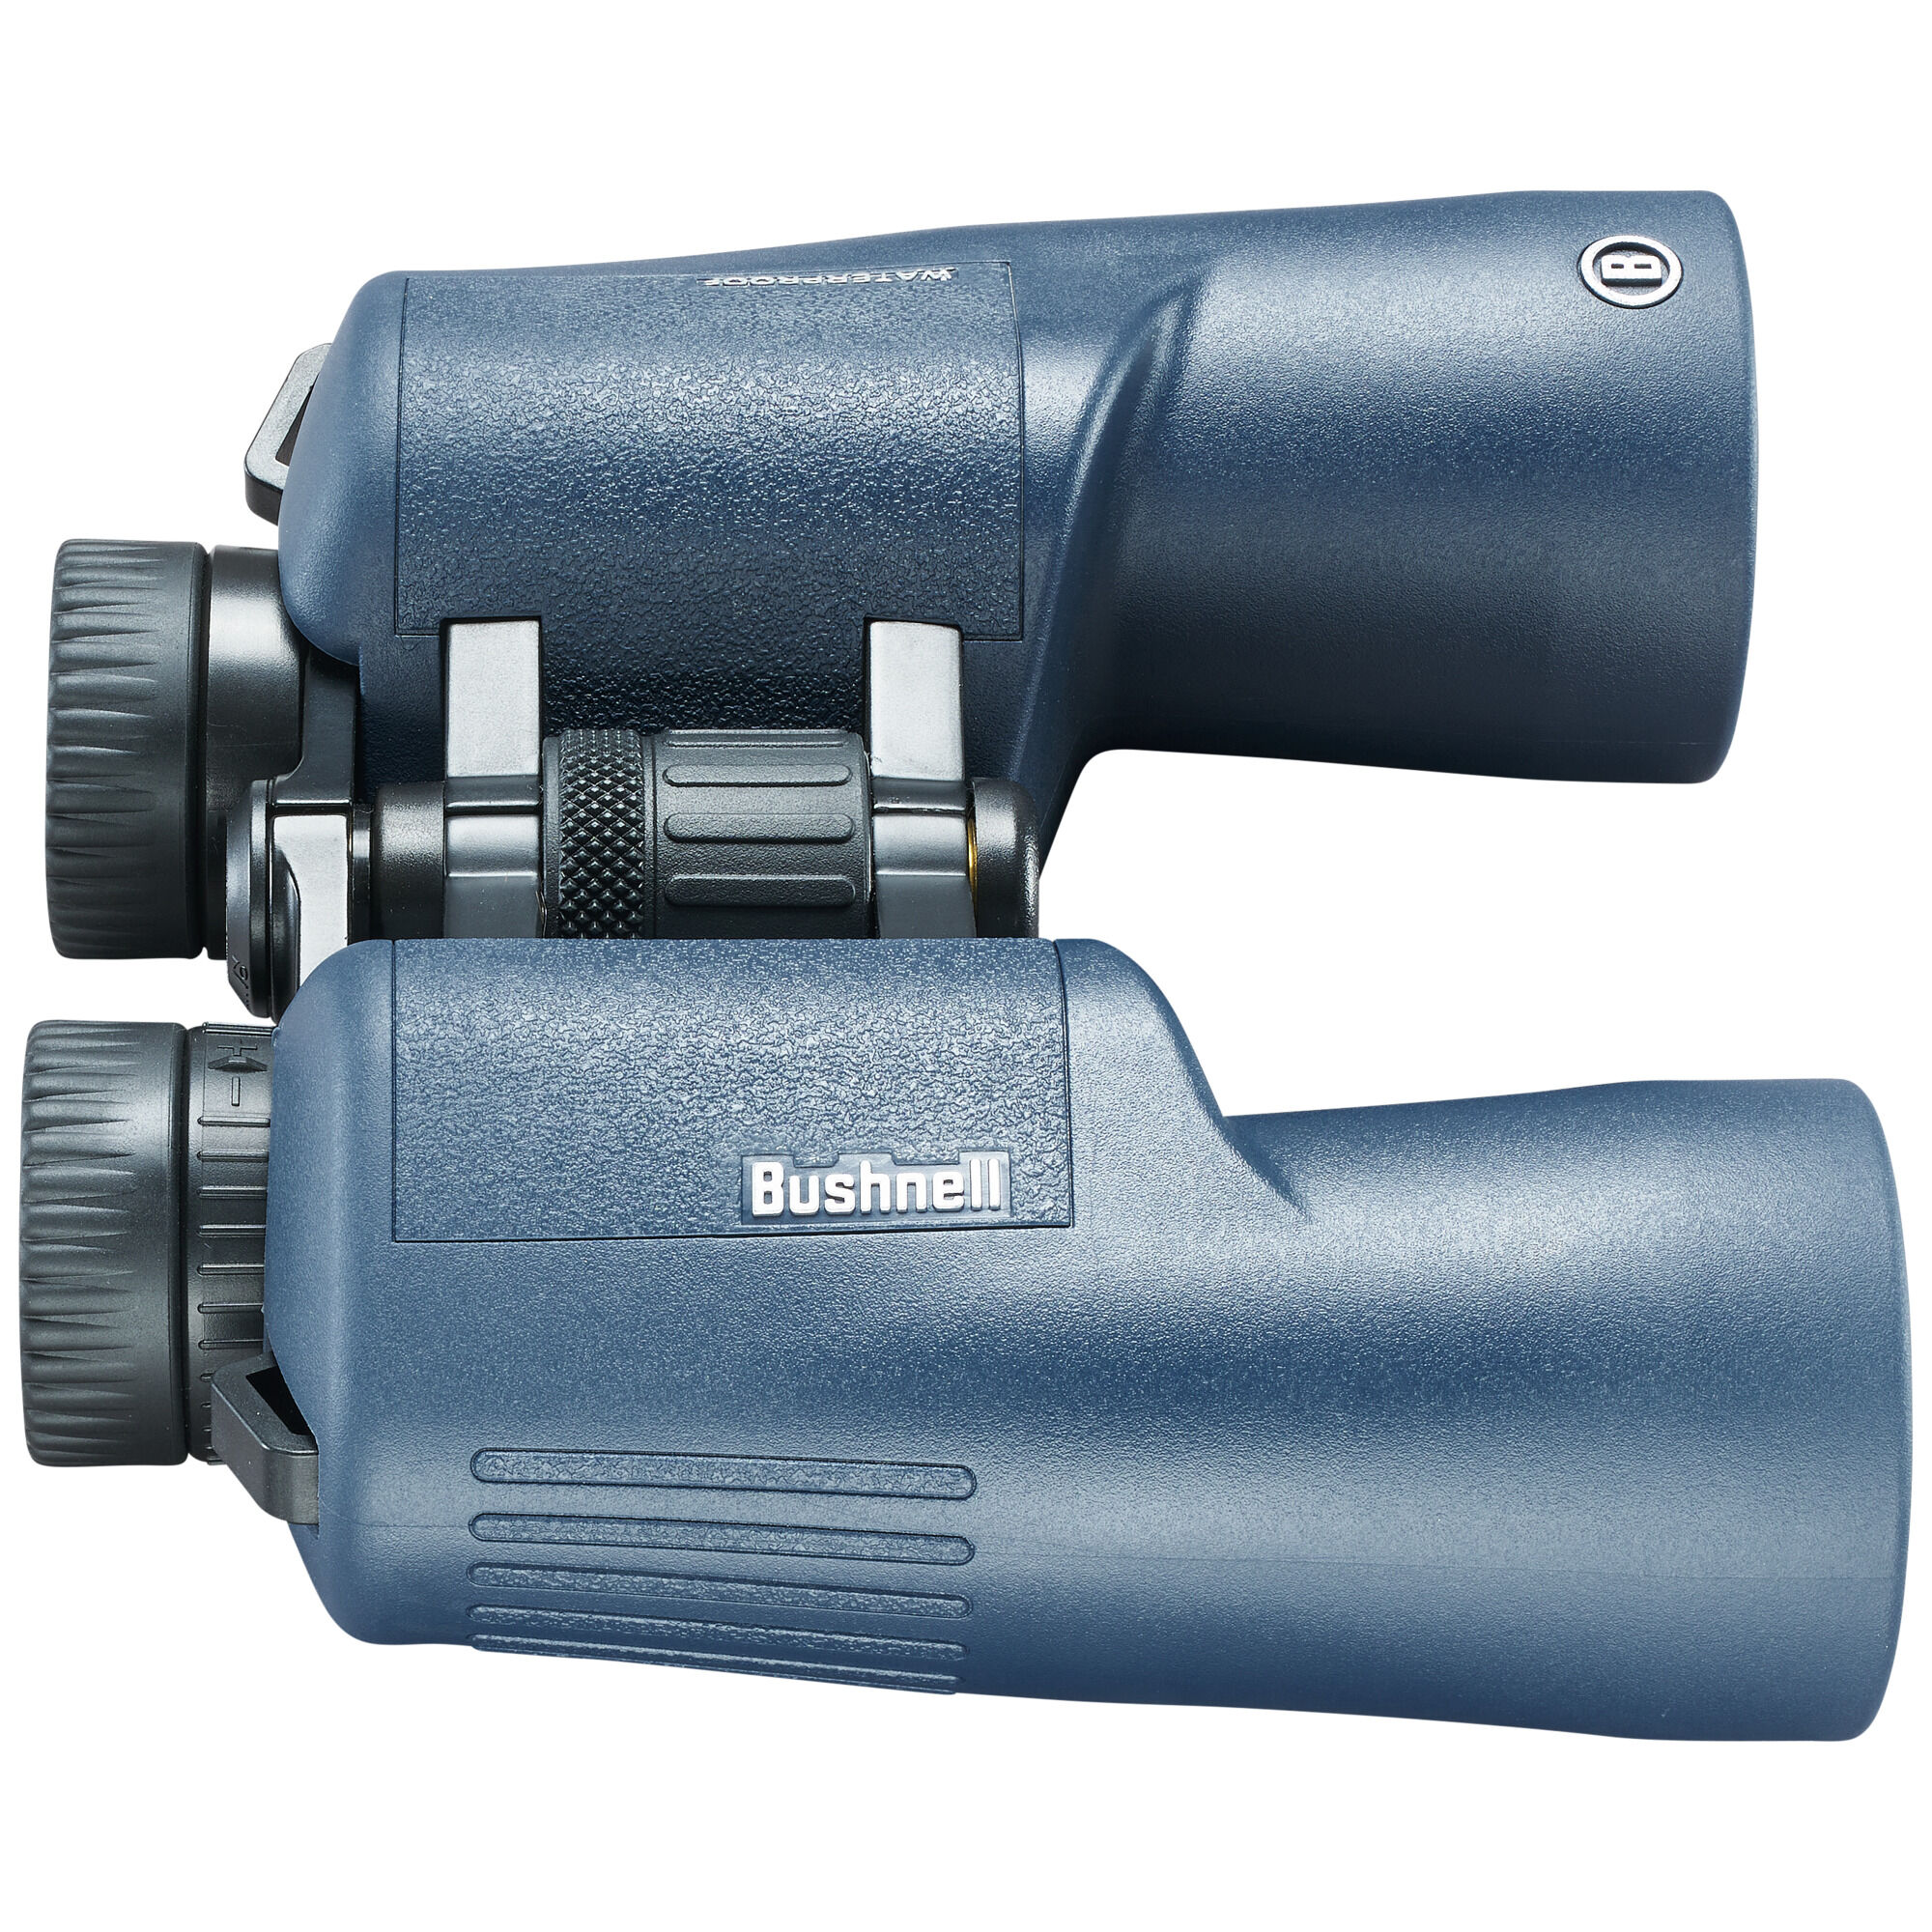 H20 Porro Prism Water Resistant Binoculars, 7x50 Magnification